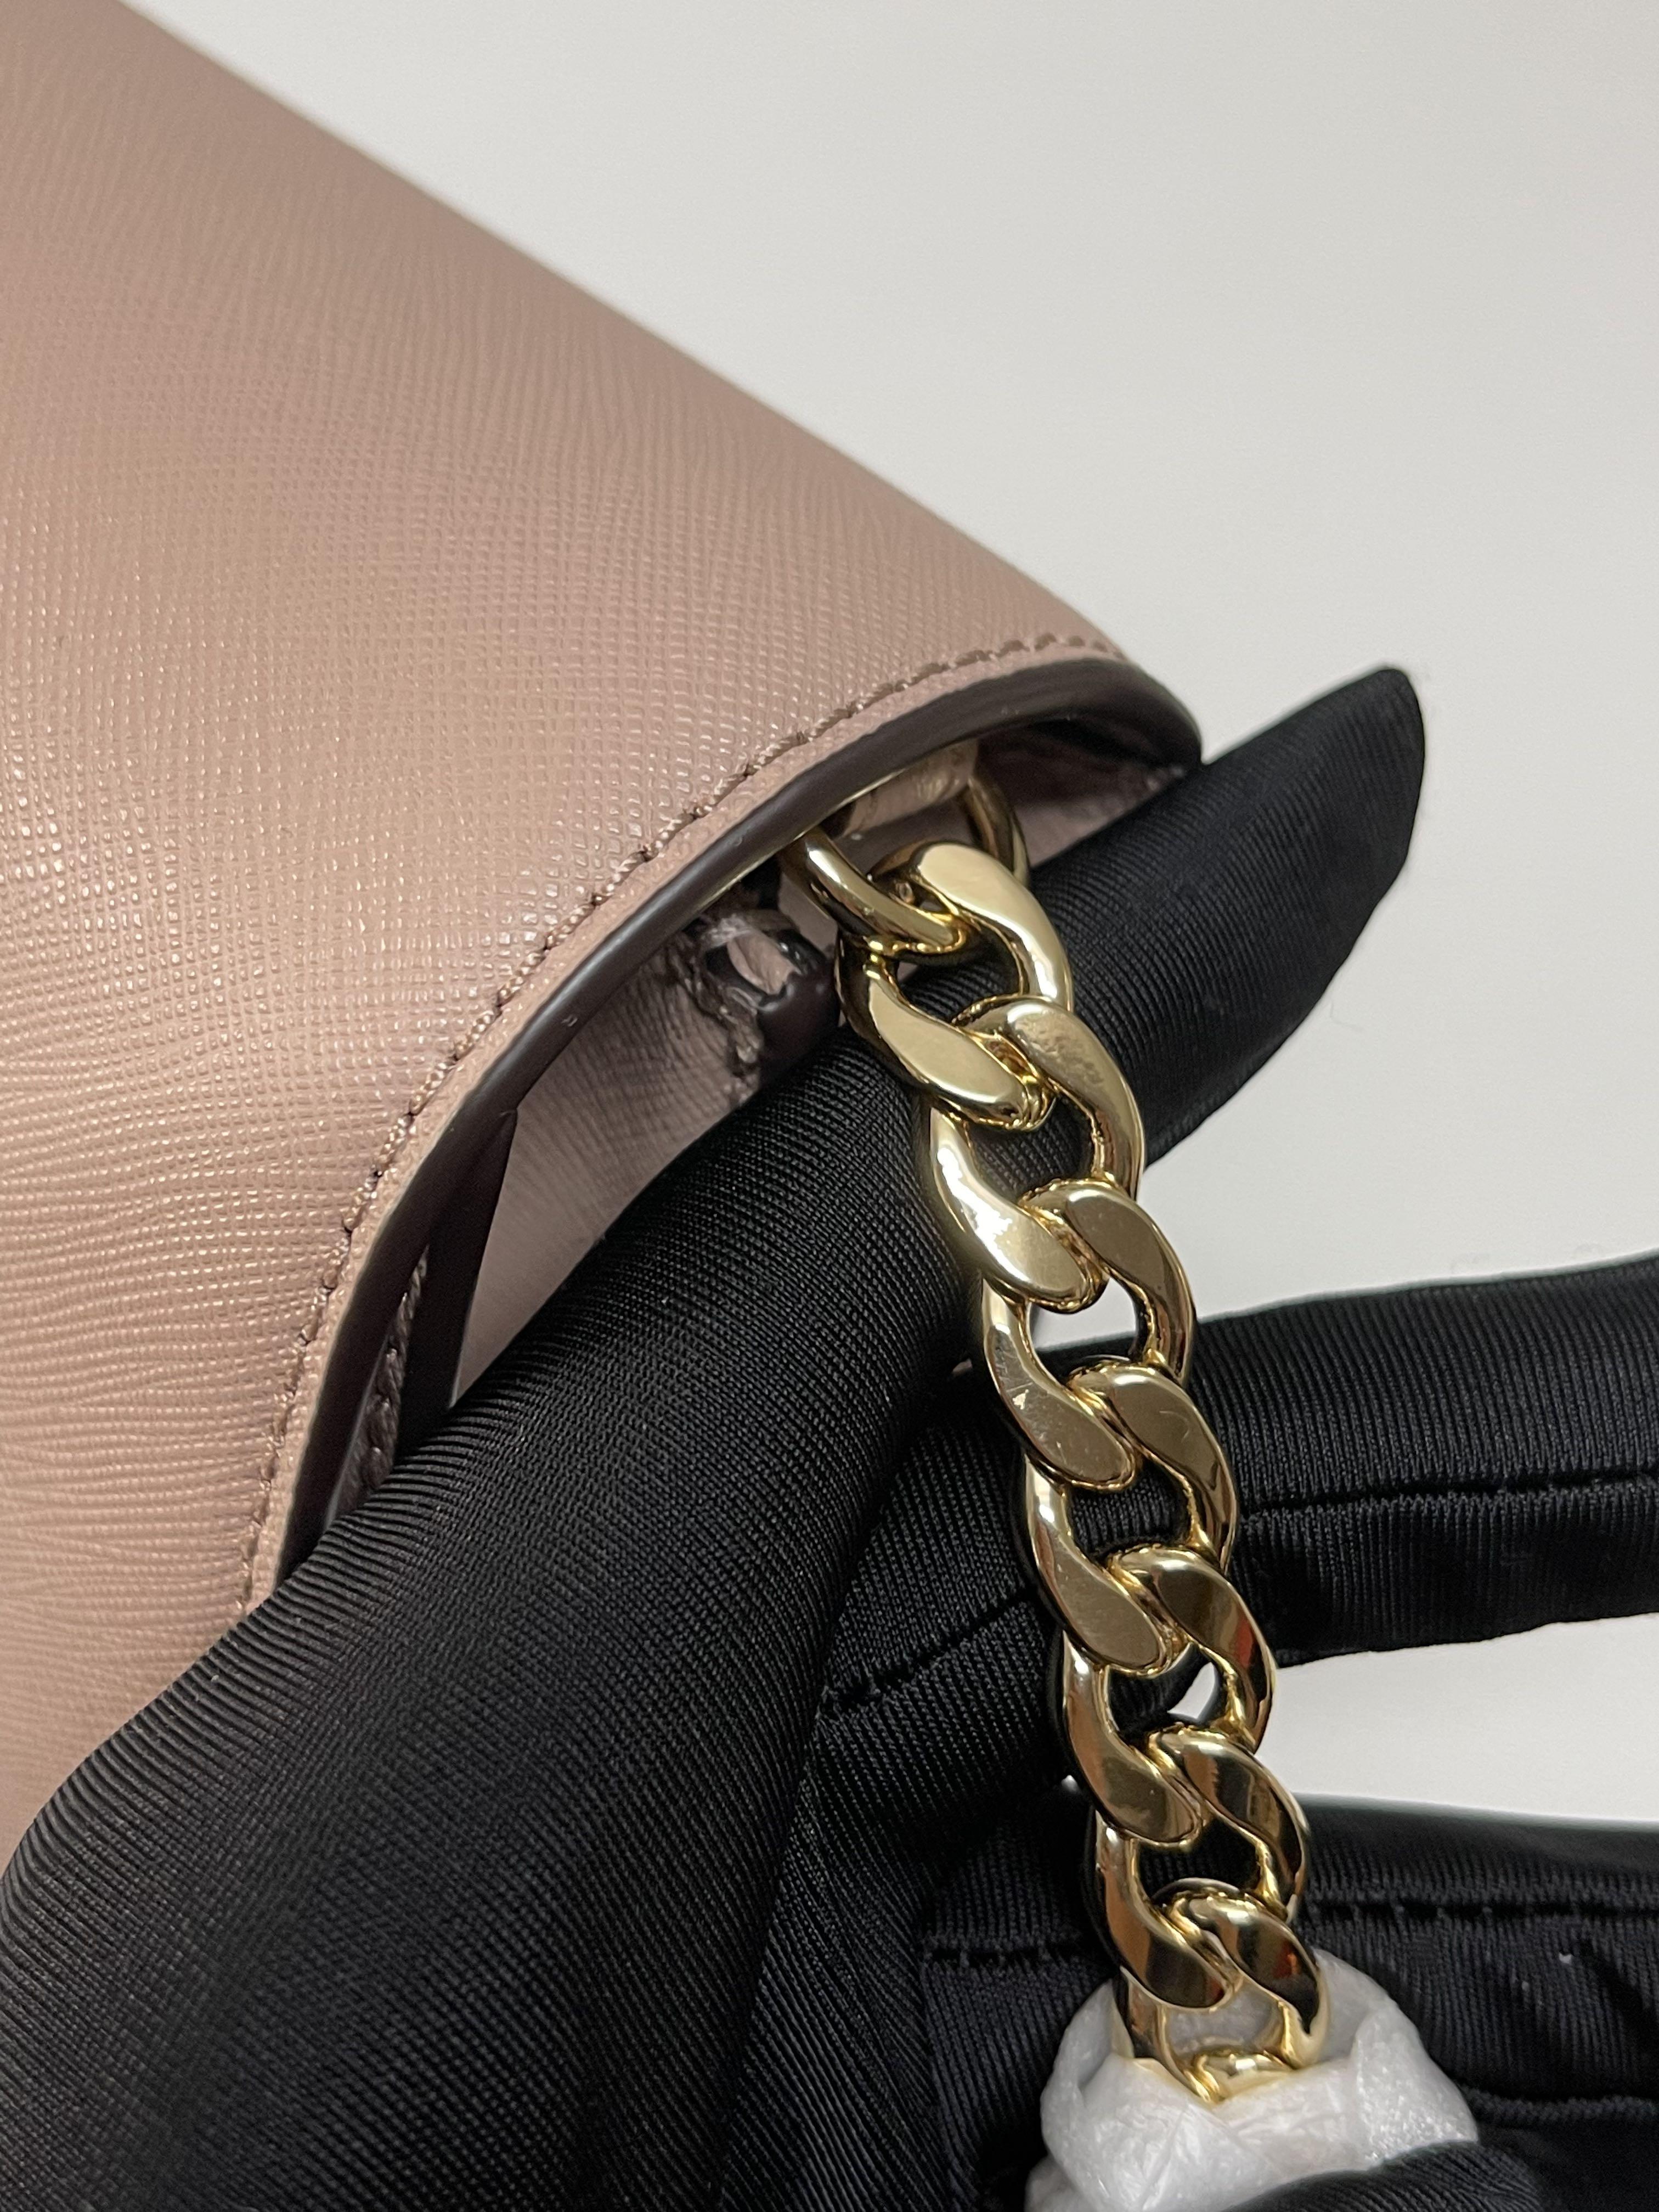 Michael Kors Daniela Large Saffiano Leather Crossbody Bag (fawn)  32S0GDDC3L-fawn